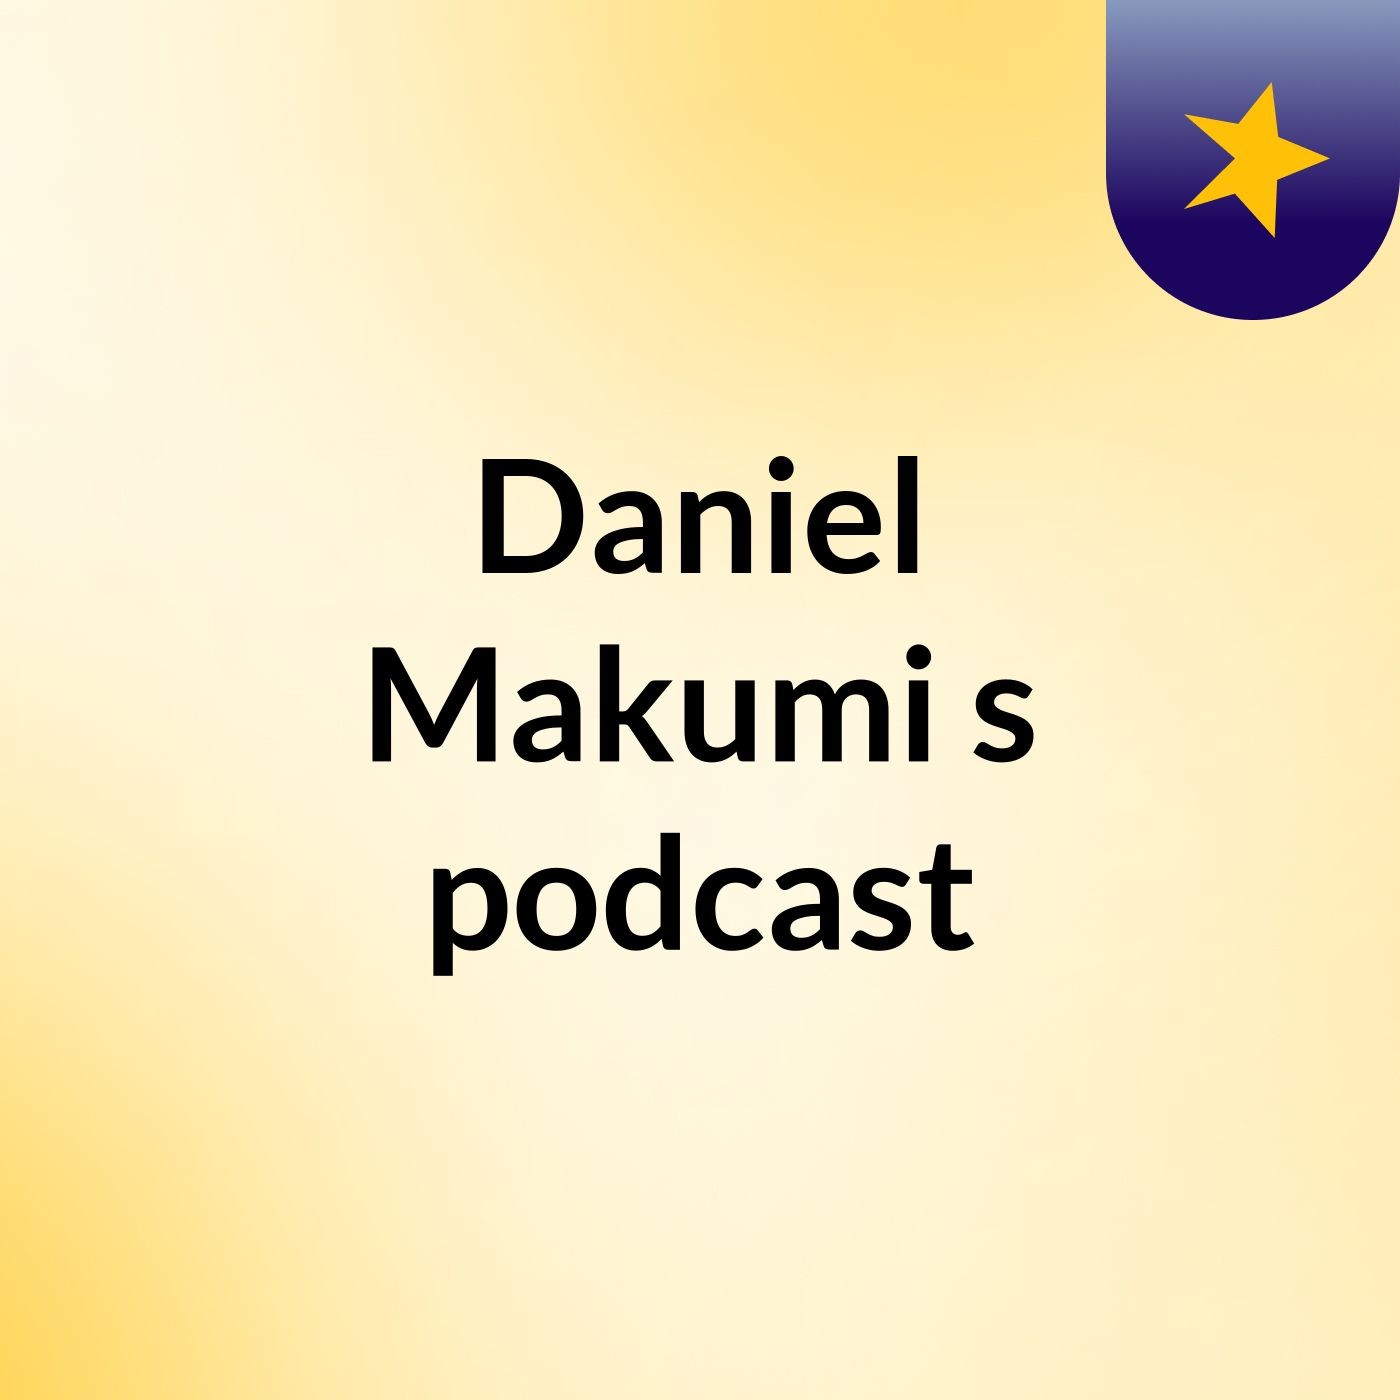 Daniel Makumi's podcast